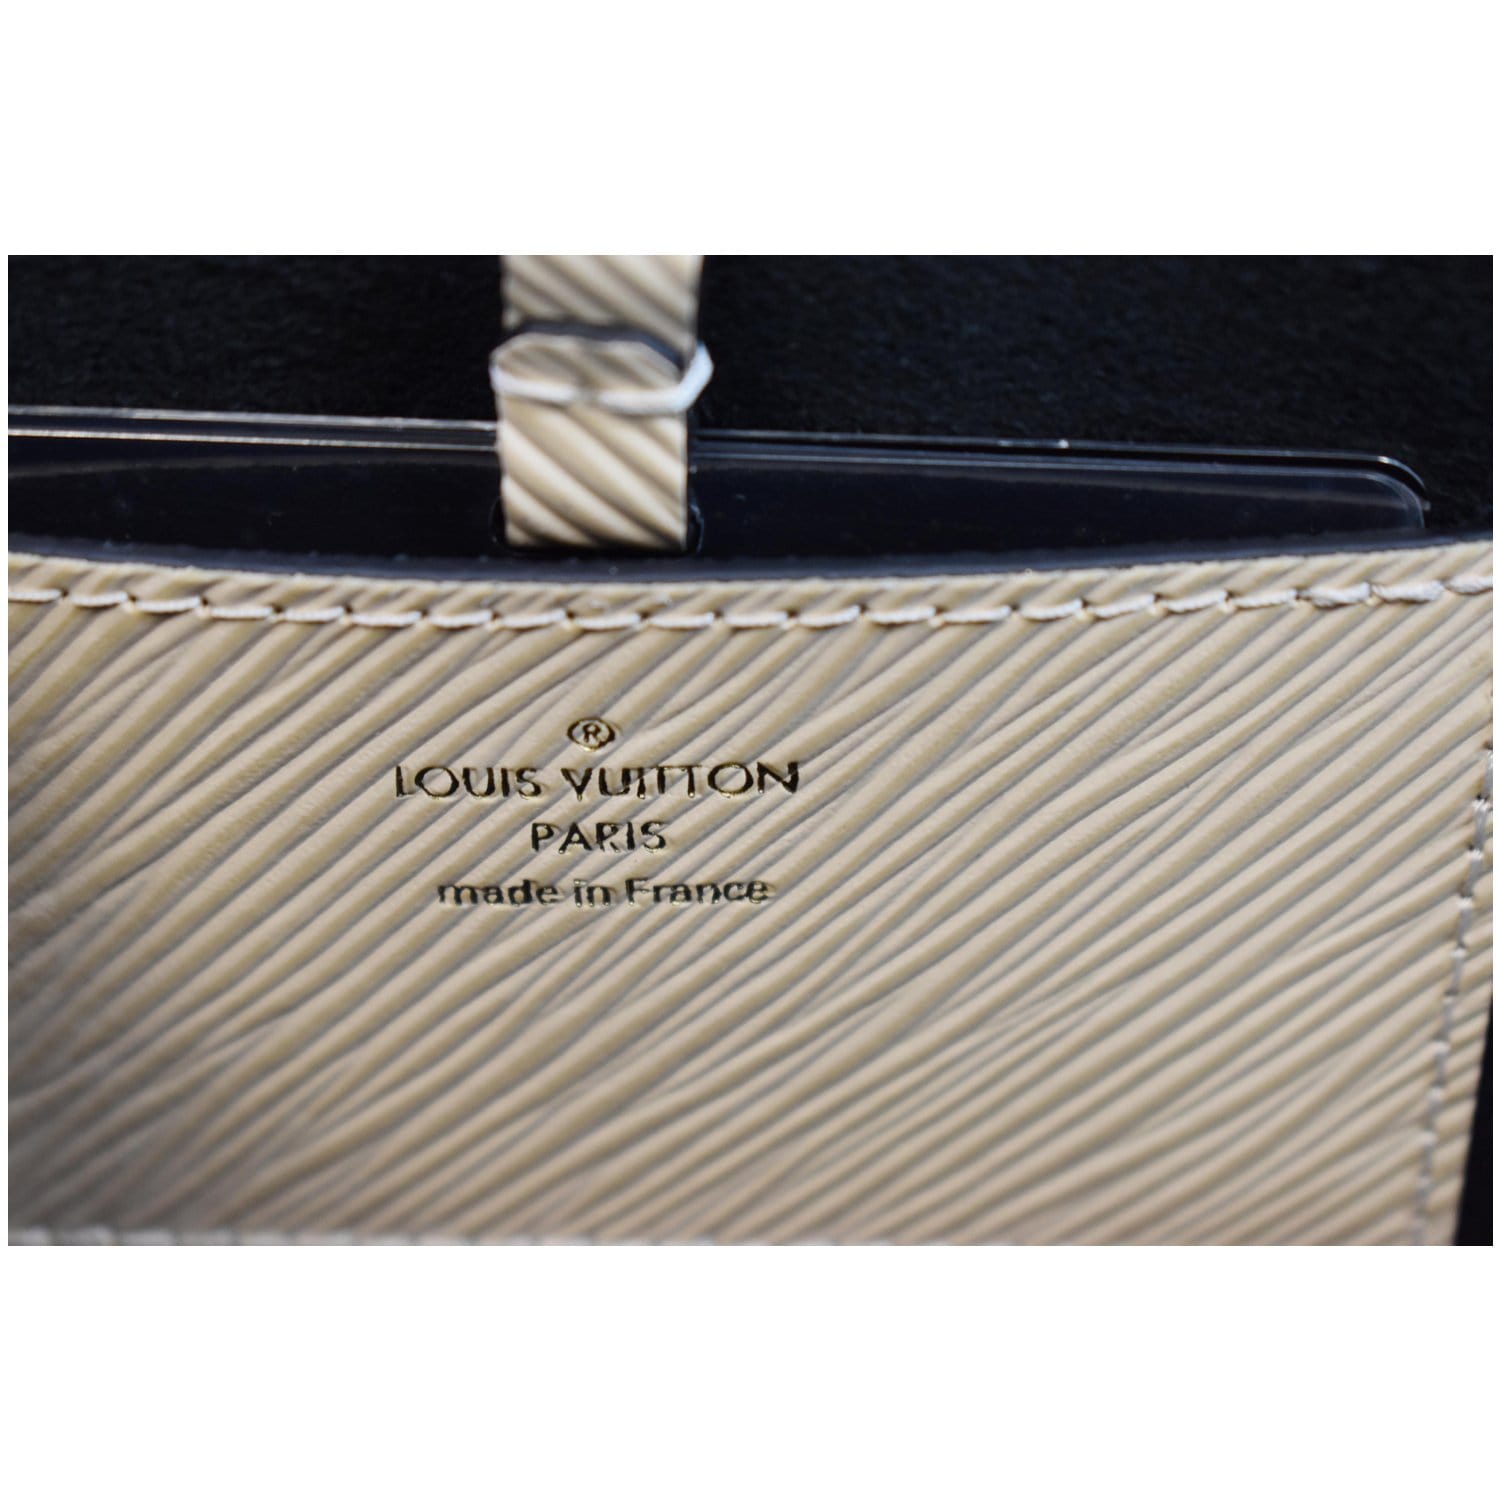 LOUIS VUITTON LV Crafty Twist MM Grained Epi Shoulder Bag Black